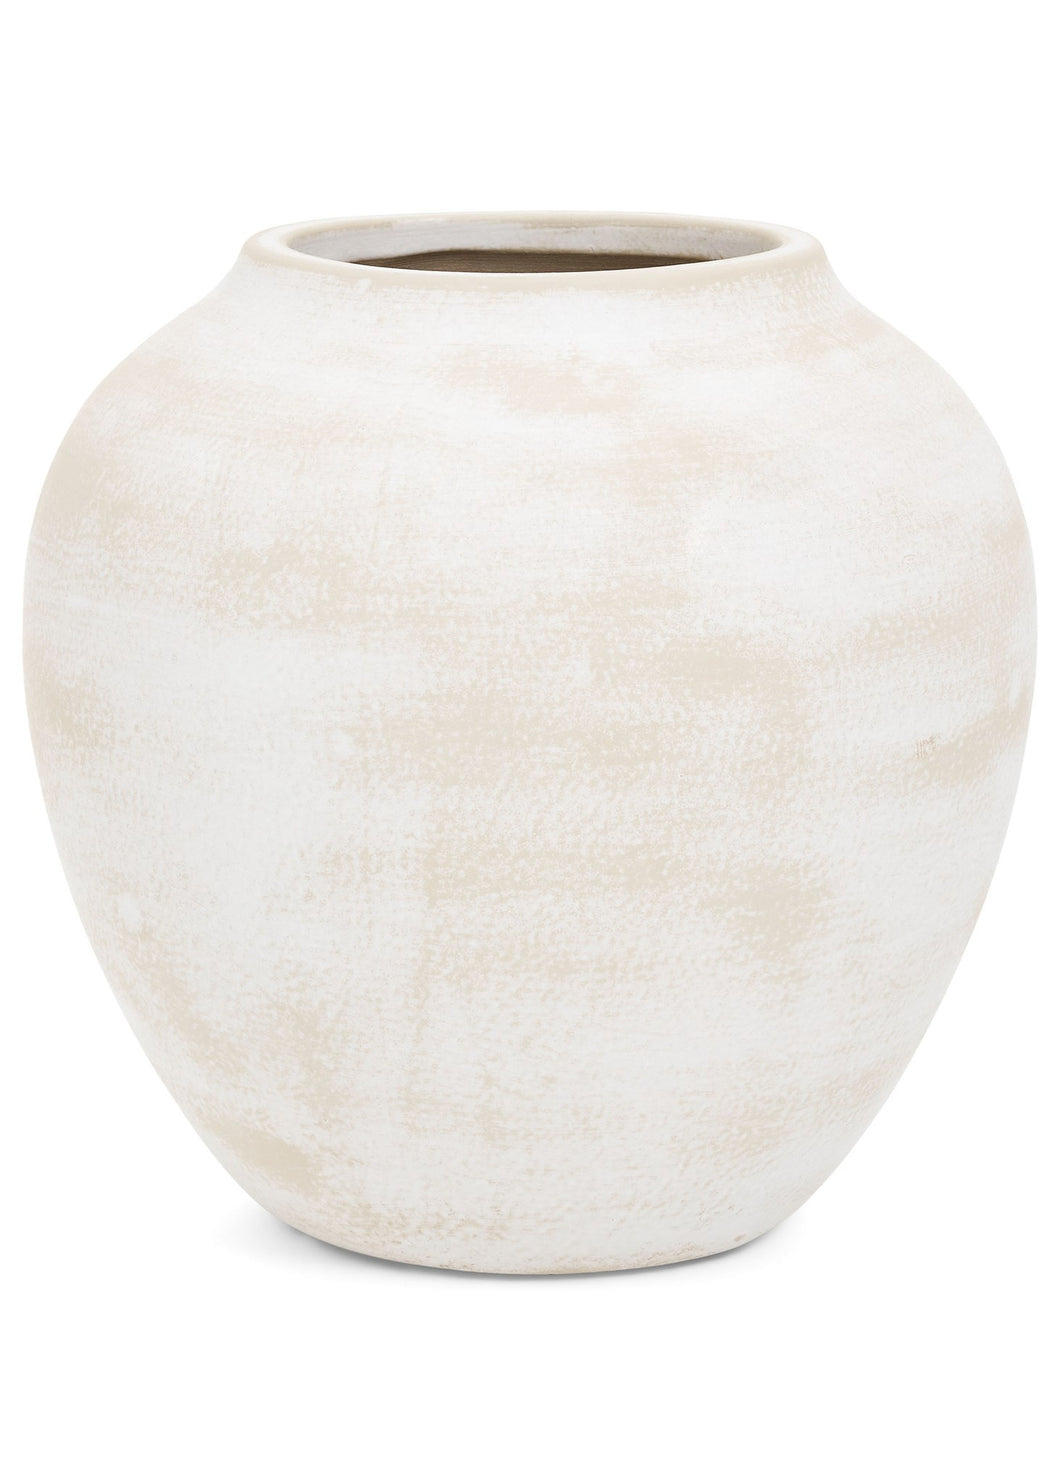 Vase Ceramic White Wash Sand